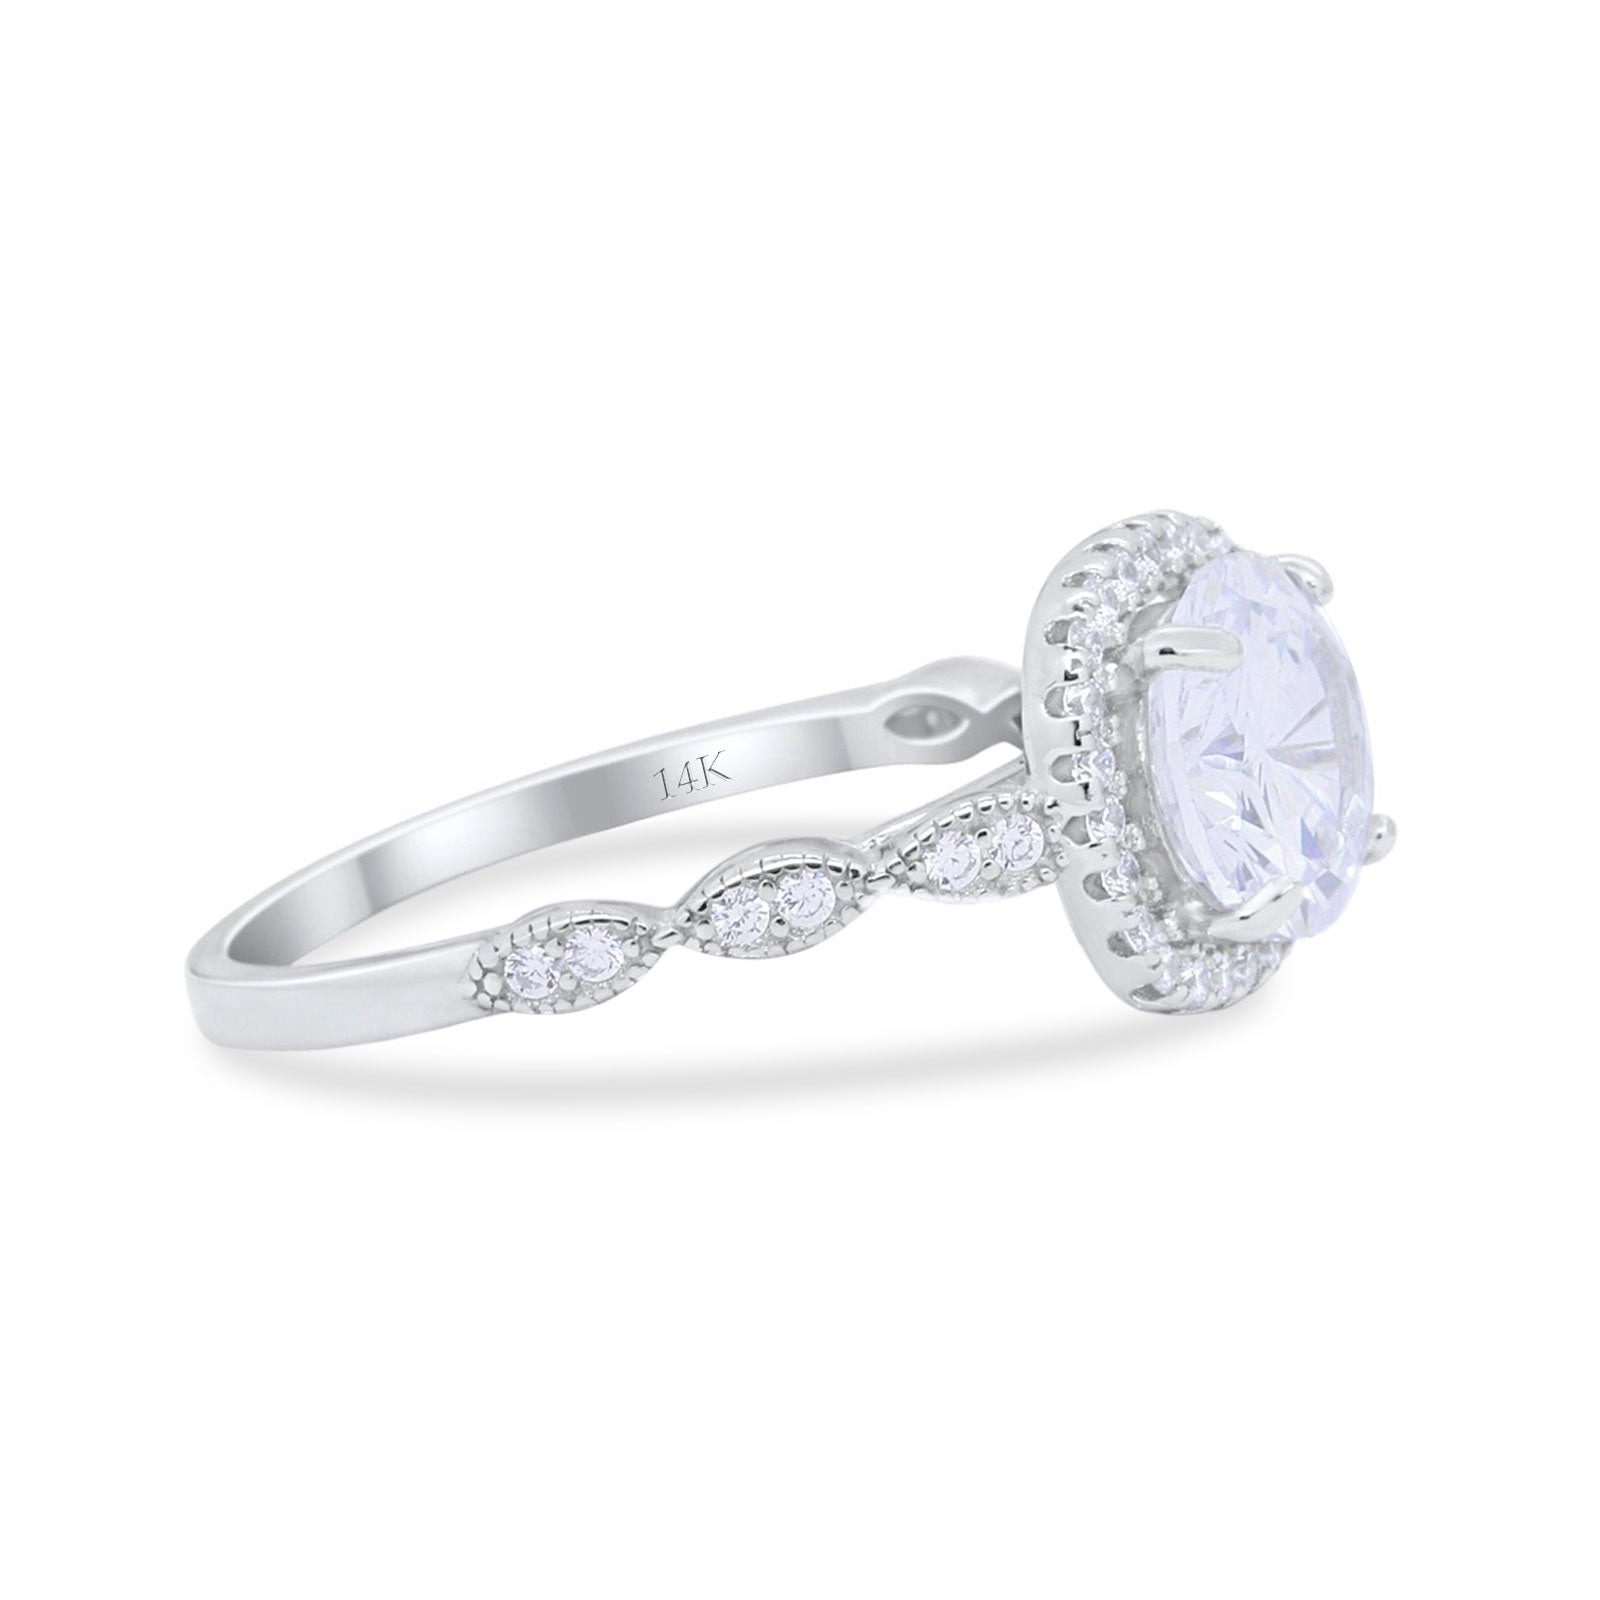 14K Gold Round Shape Art Deco Bridal Simulated Cubic Zirconia Wedding Engagement Ring